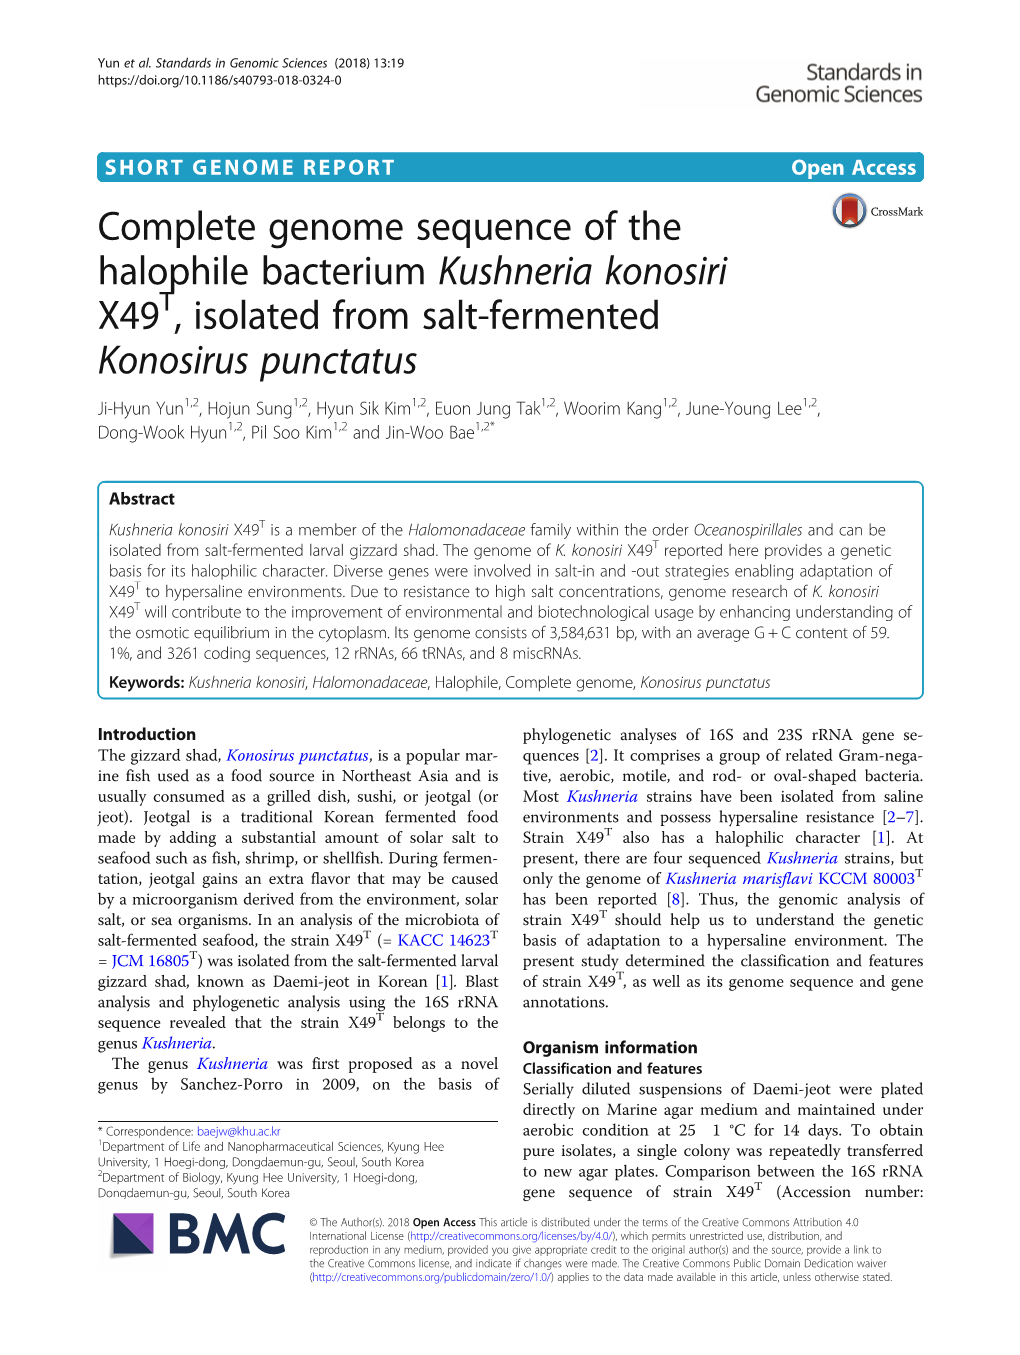 Complete Genome Sequence of the Halophile Bacterium Kushneria Konosiri X49T, Isolated from Salt-Fermented Konosirus Punctatus